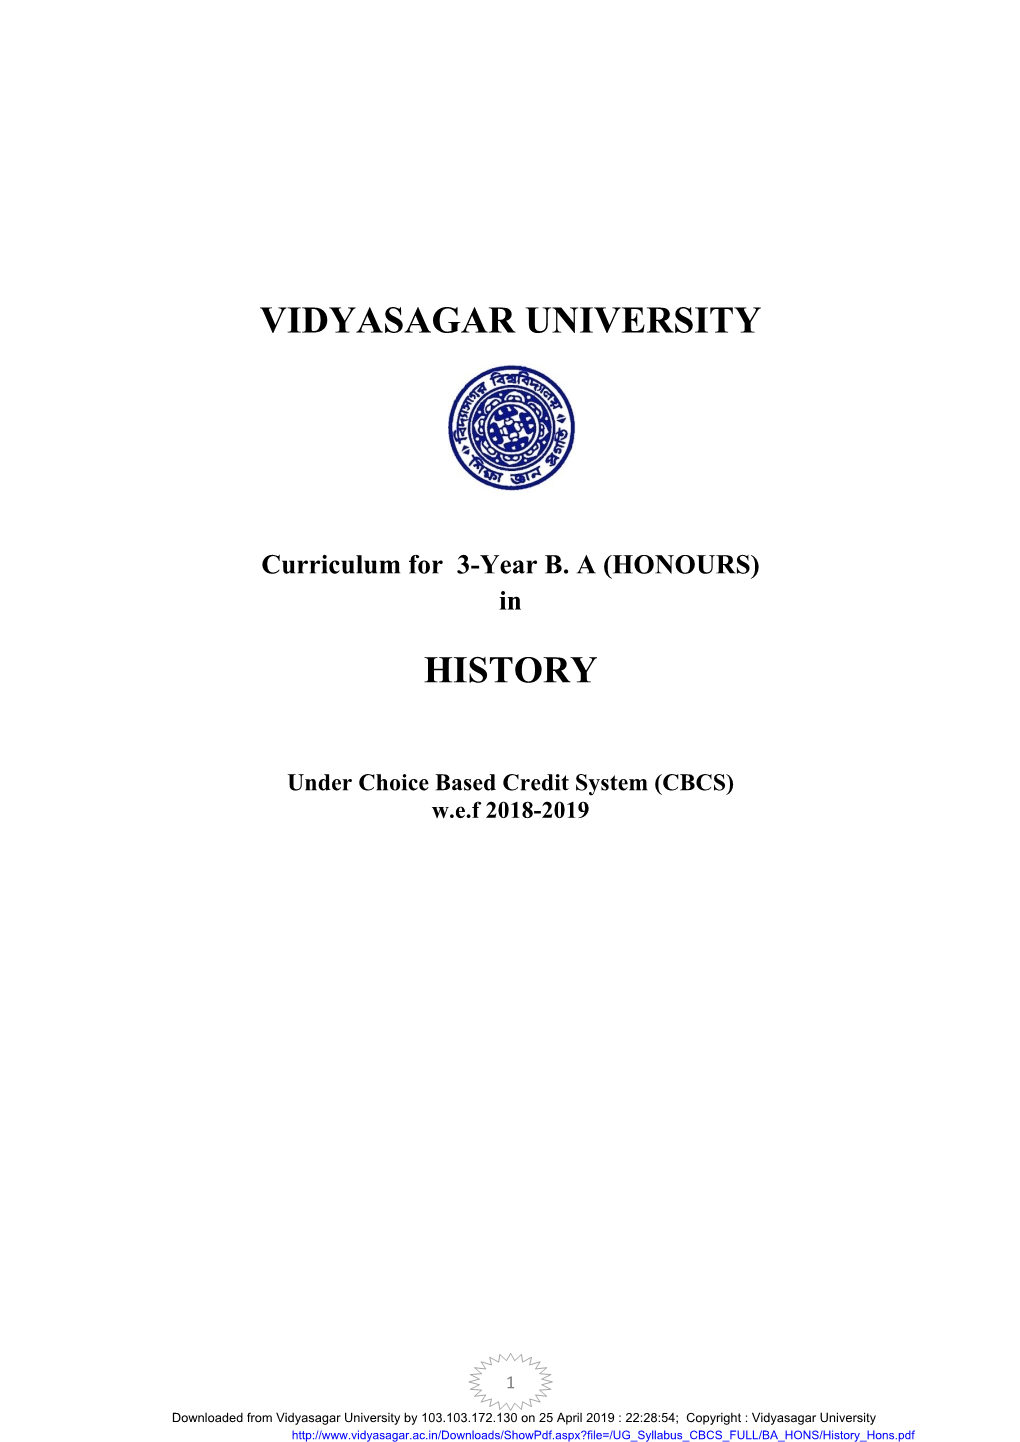 Vidyasagar University History